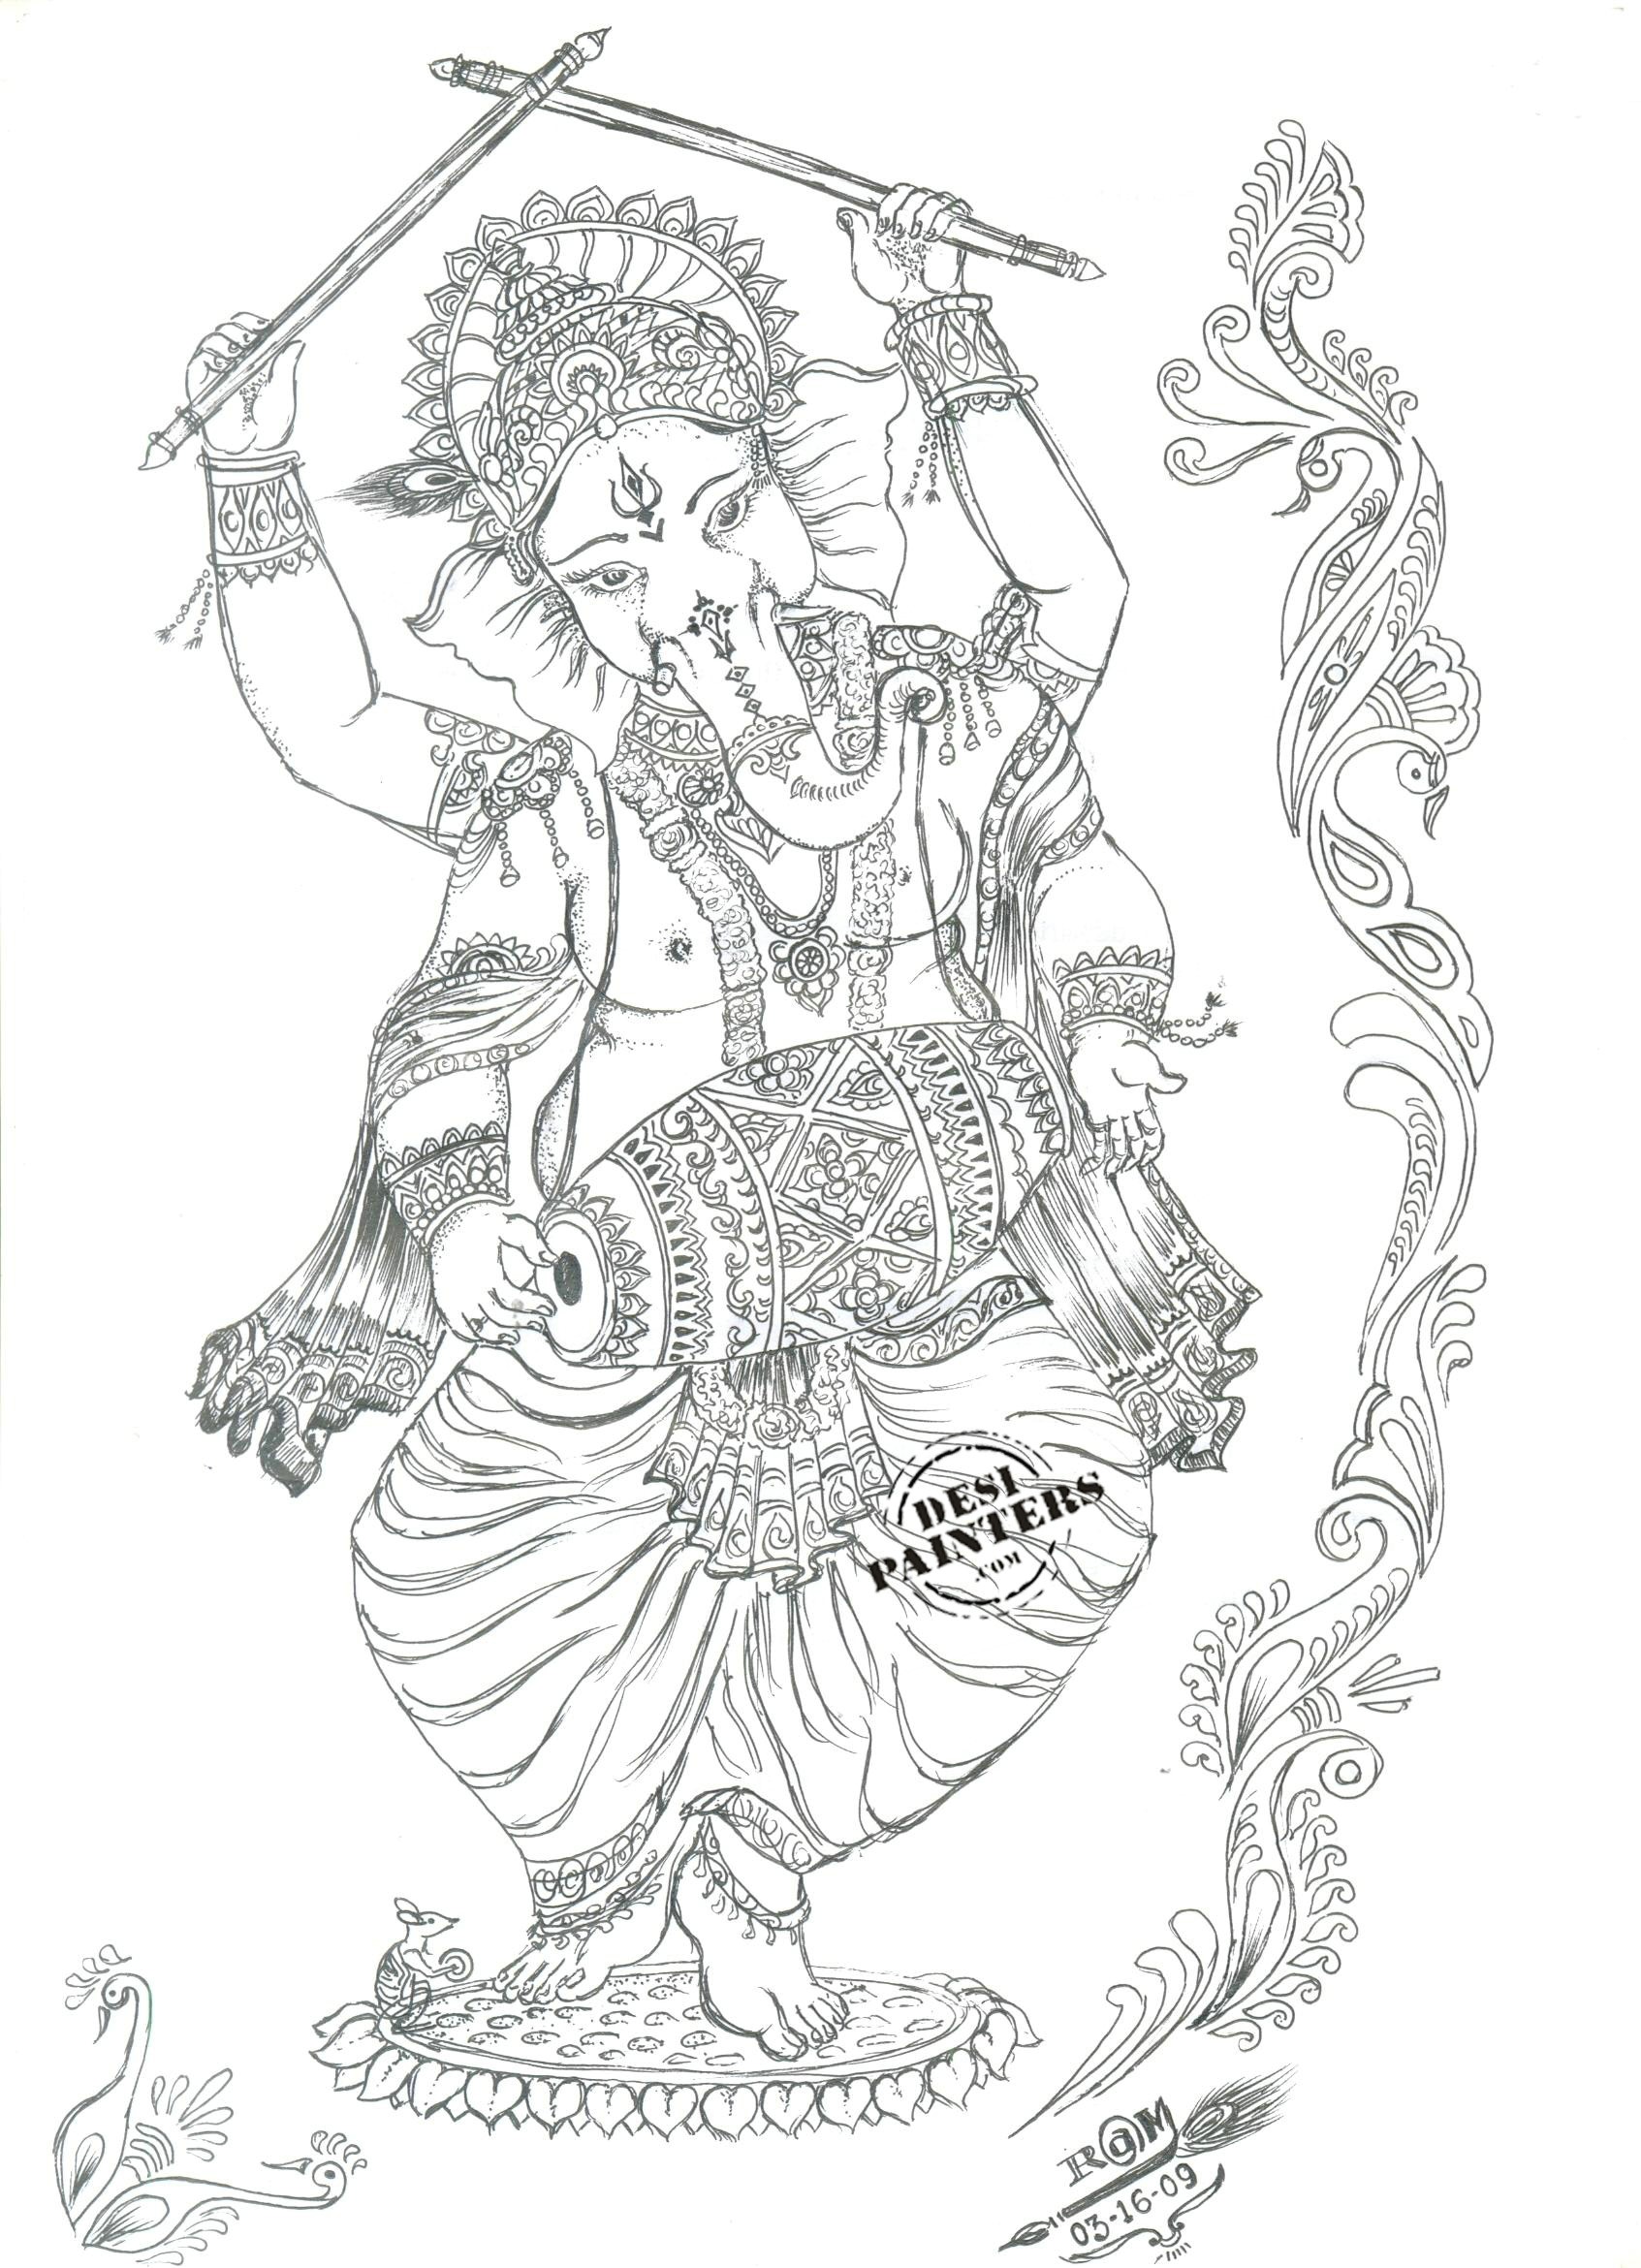 Dancing Ganesha with instruments | DesiPainters.com